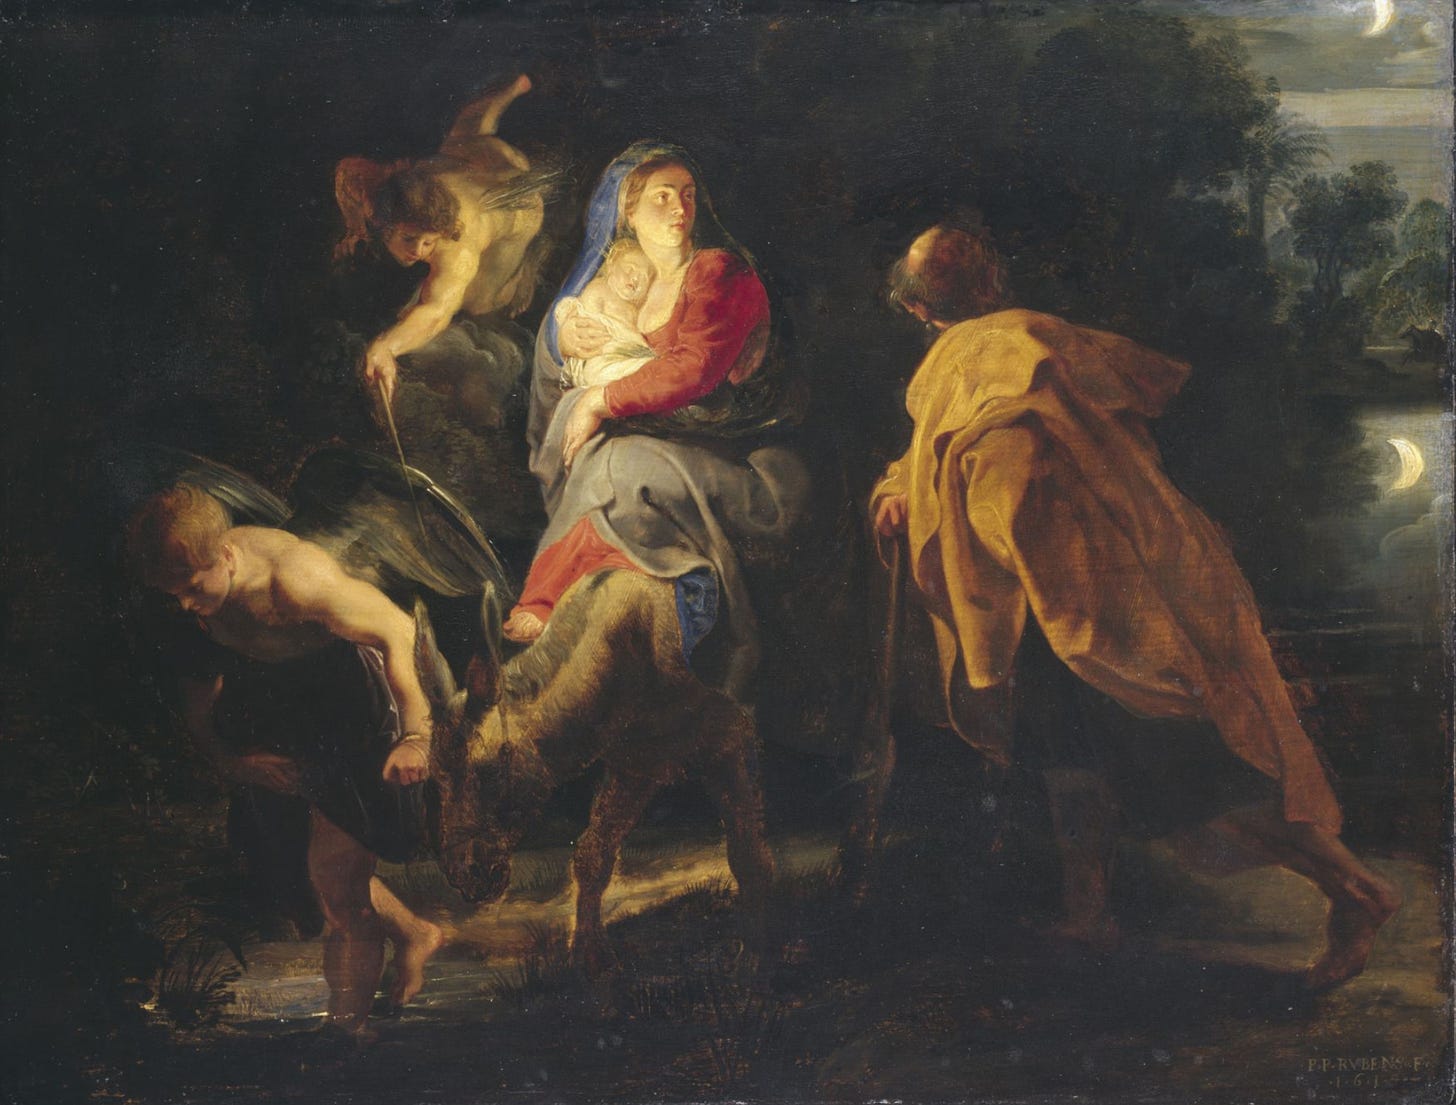 File:Rubens, Peter Paul - Flight into Egypt - 1614.jpg - Wikipedia